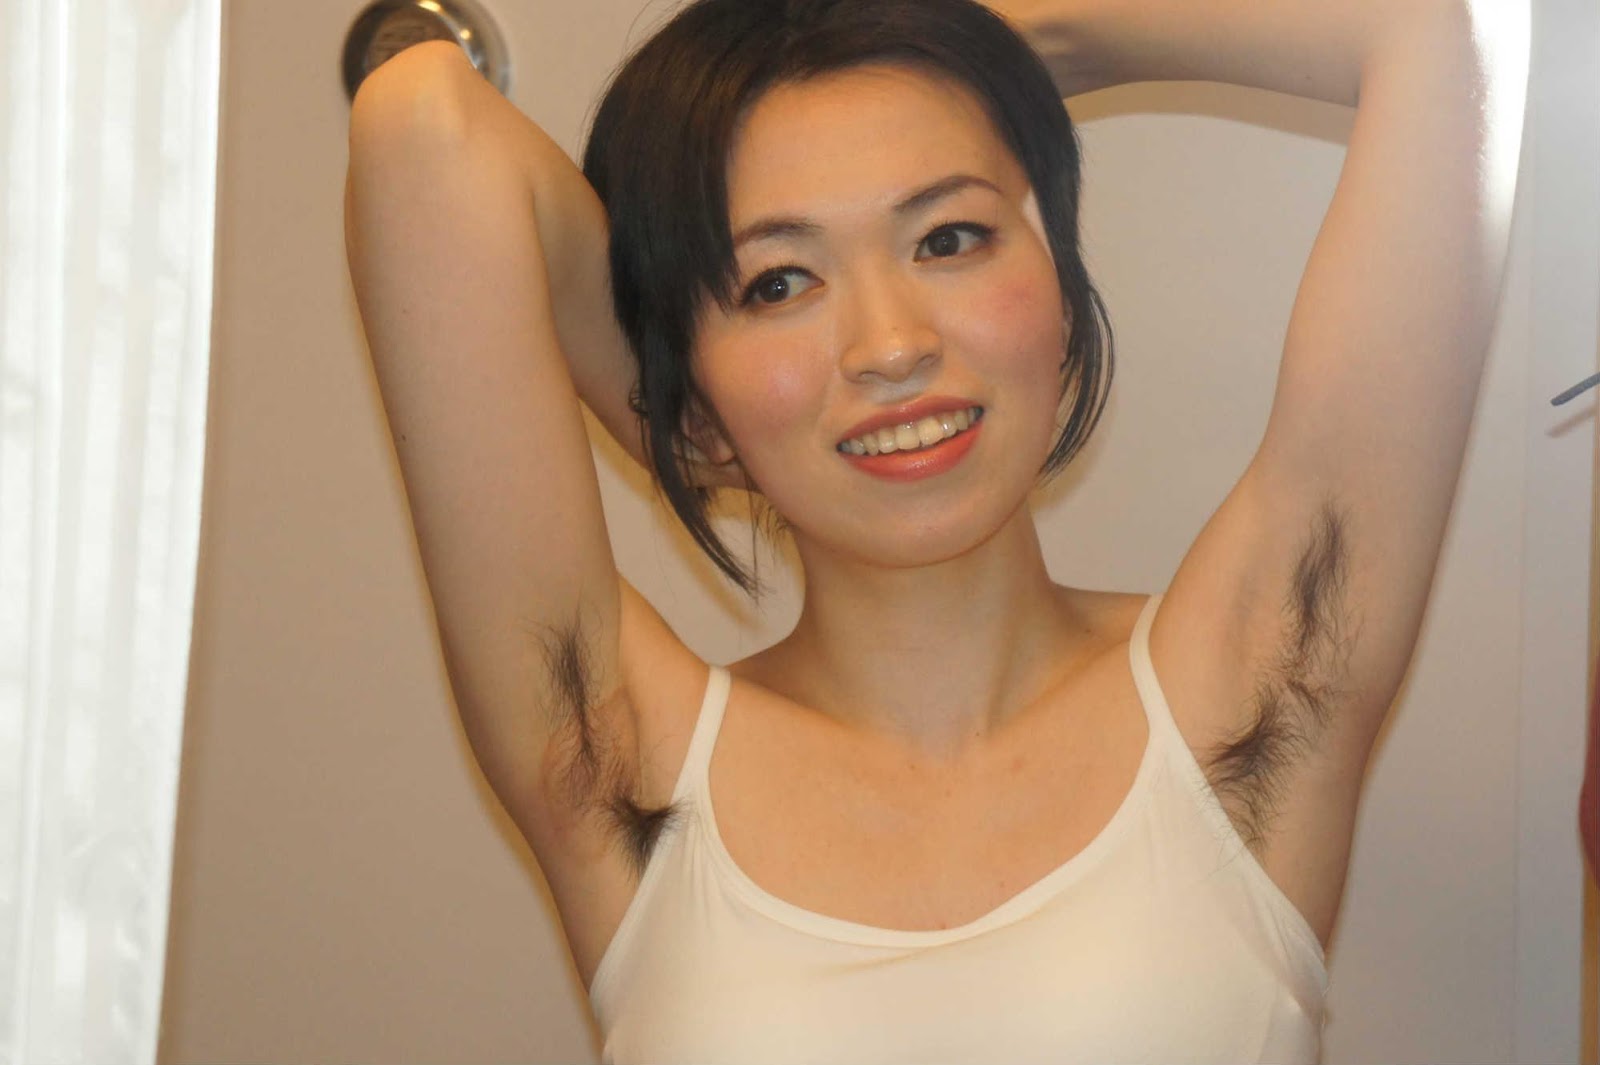 Hairy Asian Women Porn